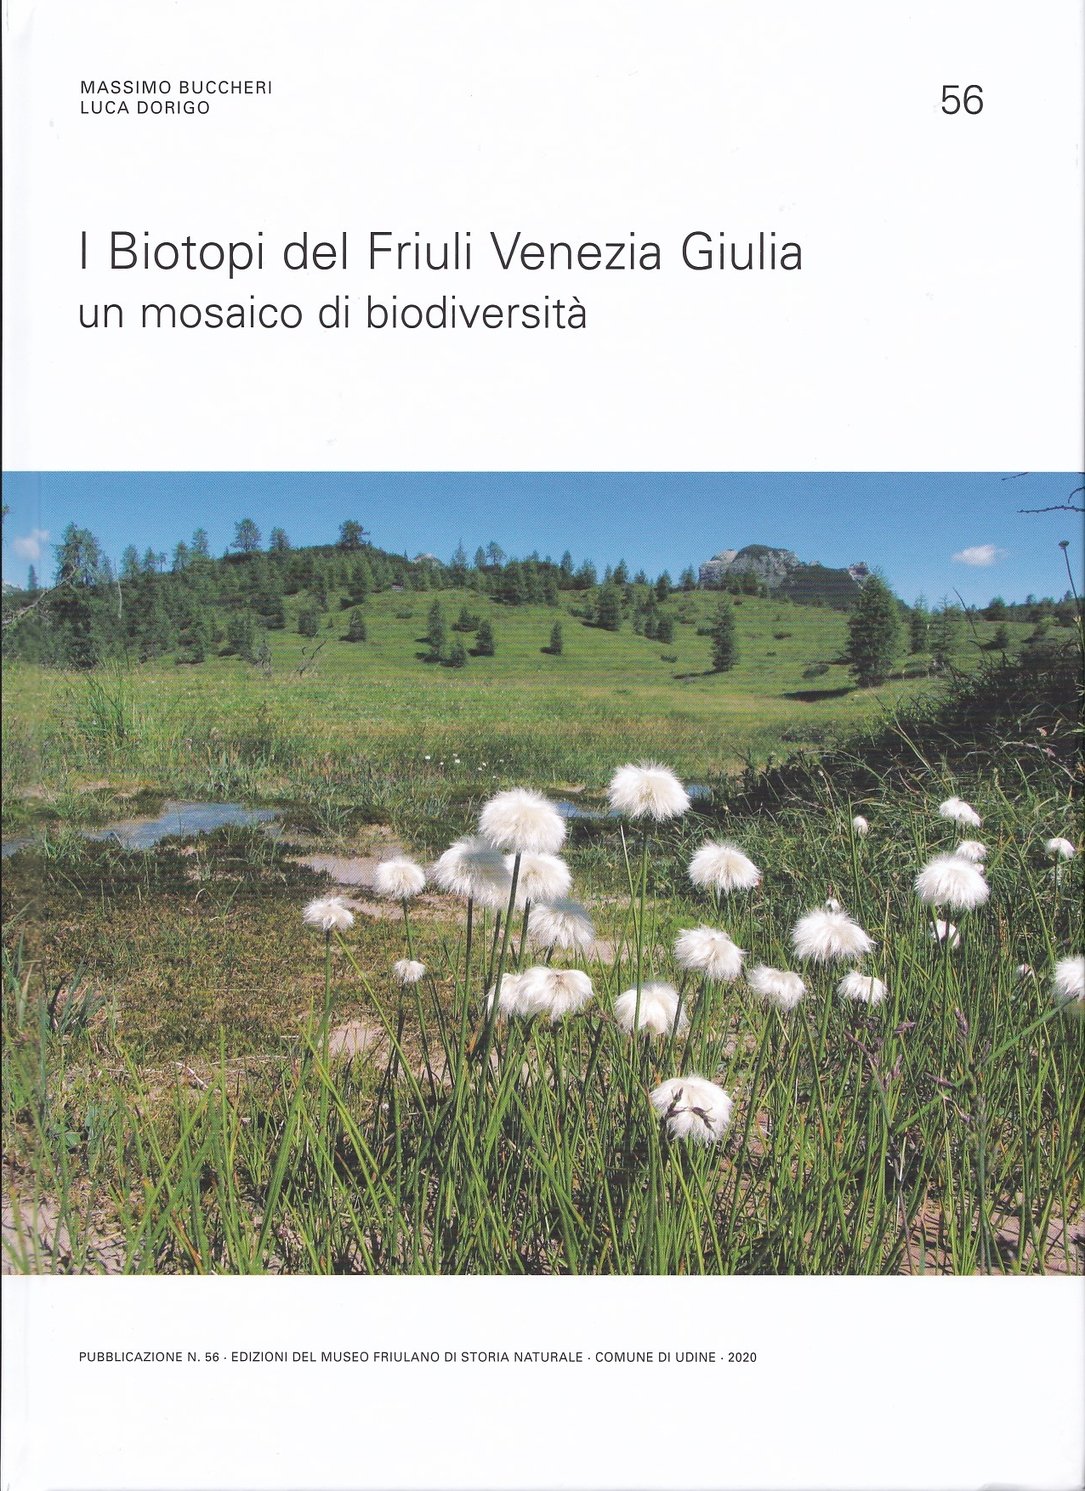 Massimo Buccheri; Luca Dorogo: I Biotopi del Friuli Venezia Giulia un mosaico di biodiversitá (Rippl-Rónai Múzeum CC BY-NC-ND)